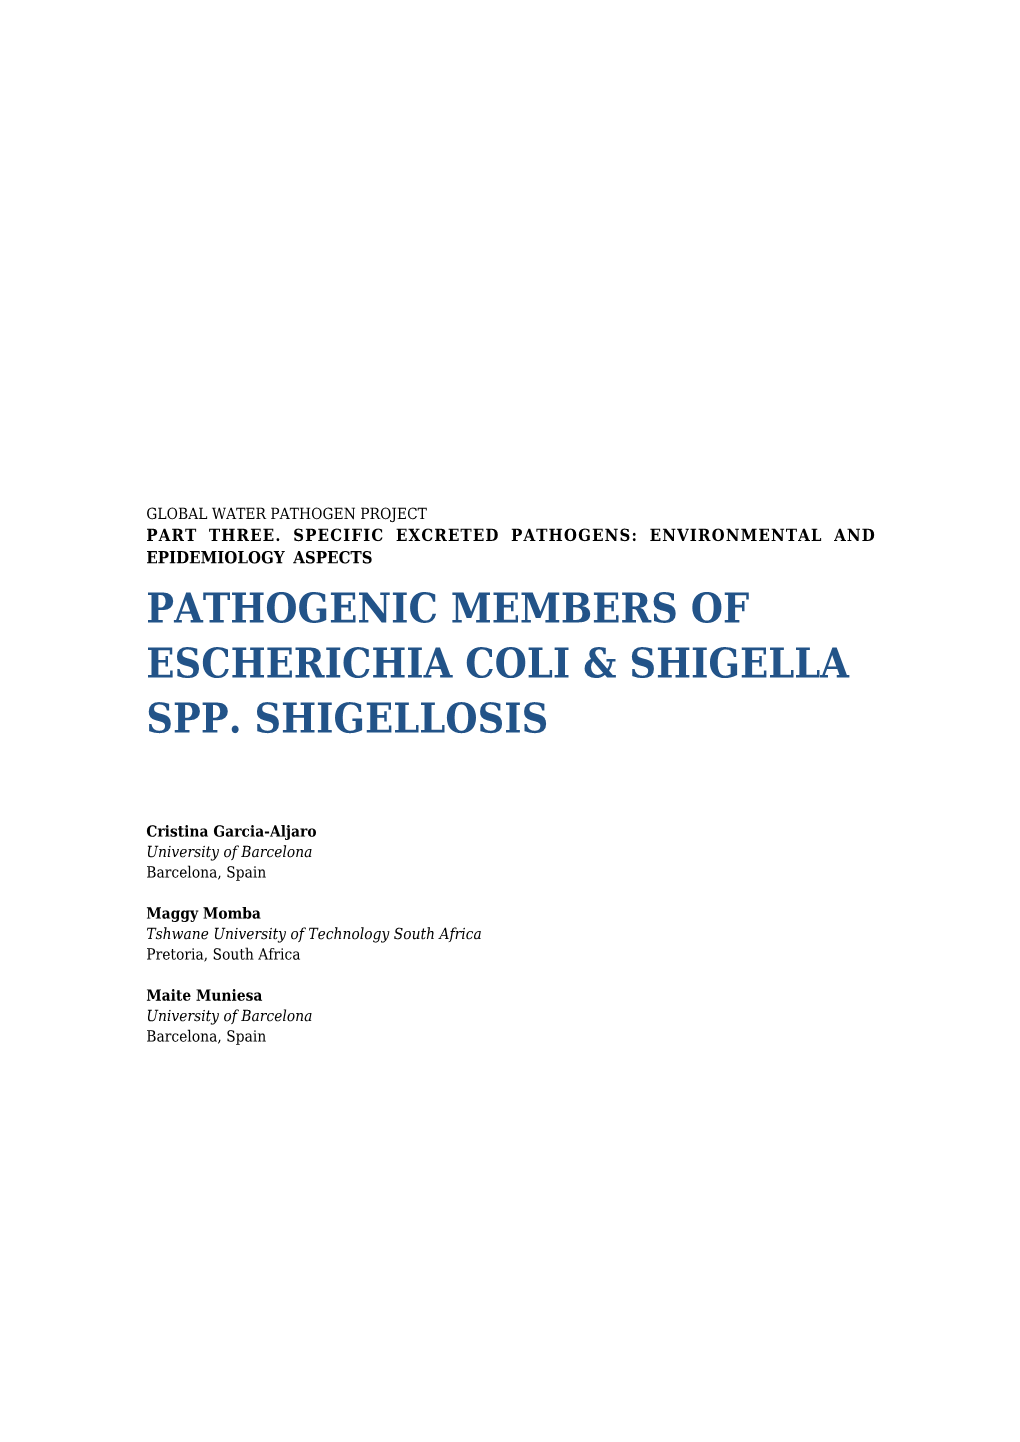 Pathogenic Members of Escherichia Coli & Shigella